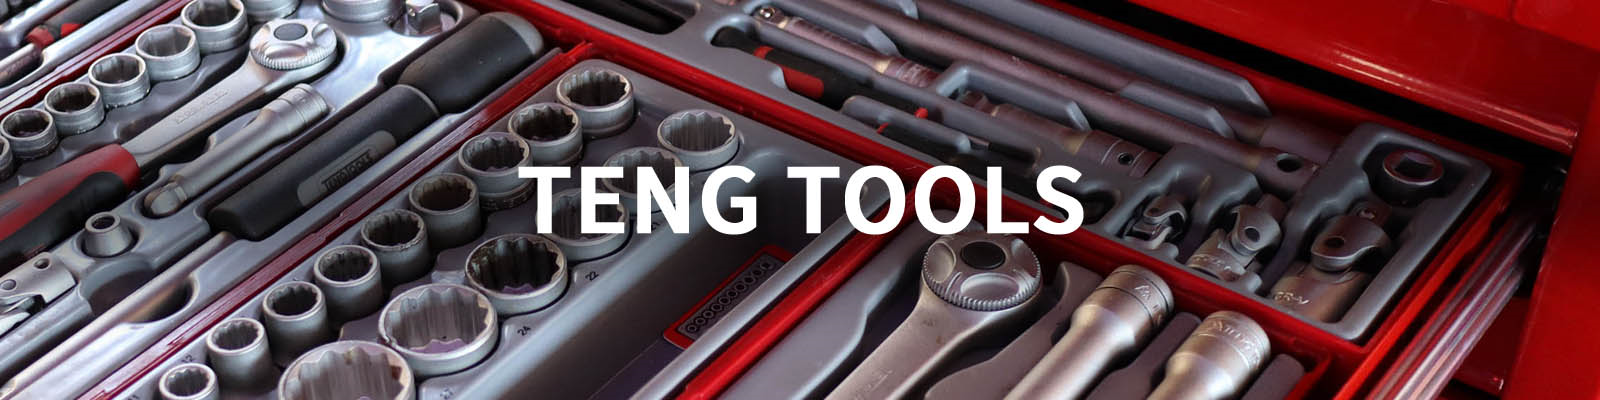 Teng Tools Hand Tools and Storage